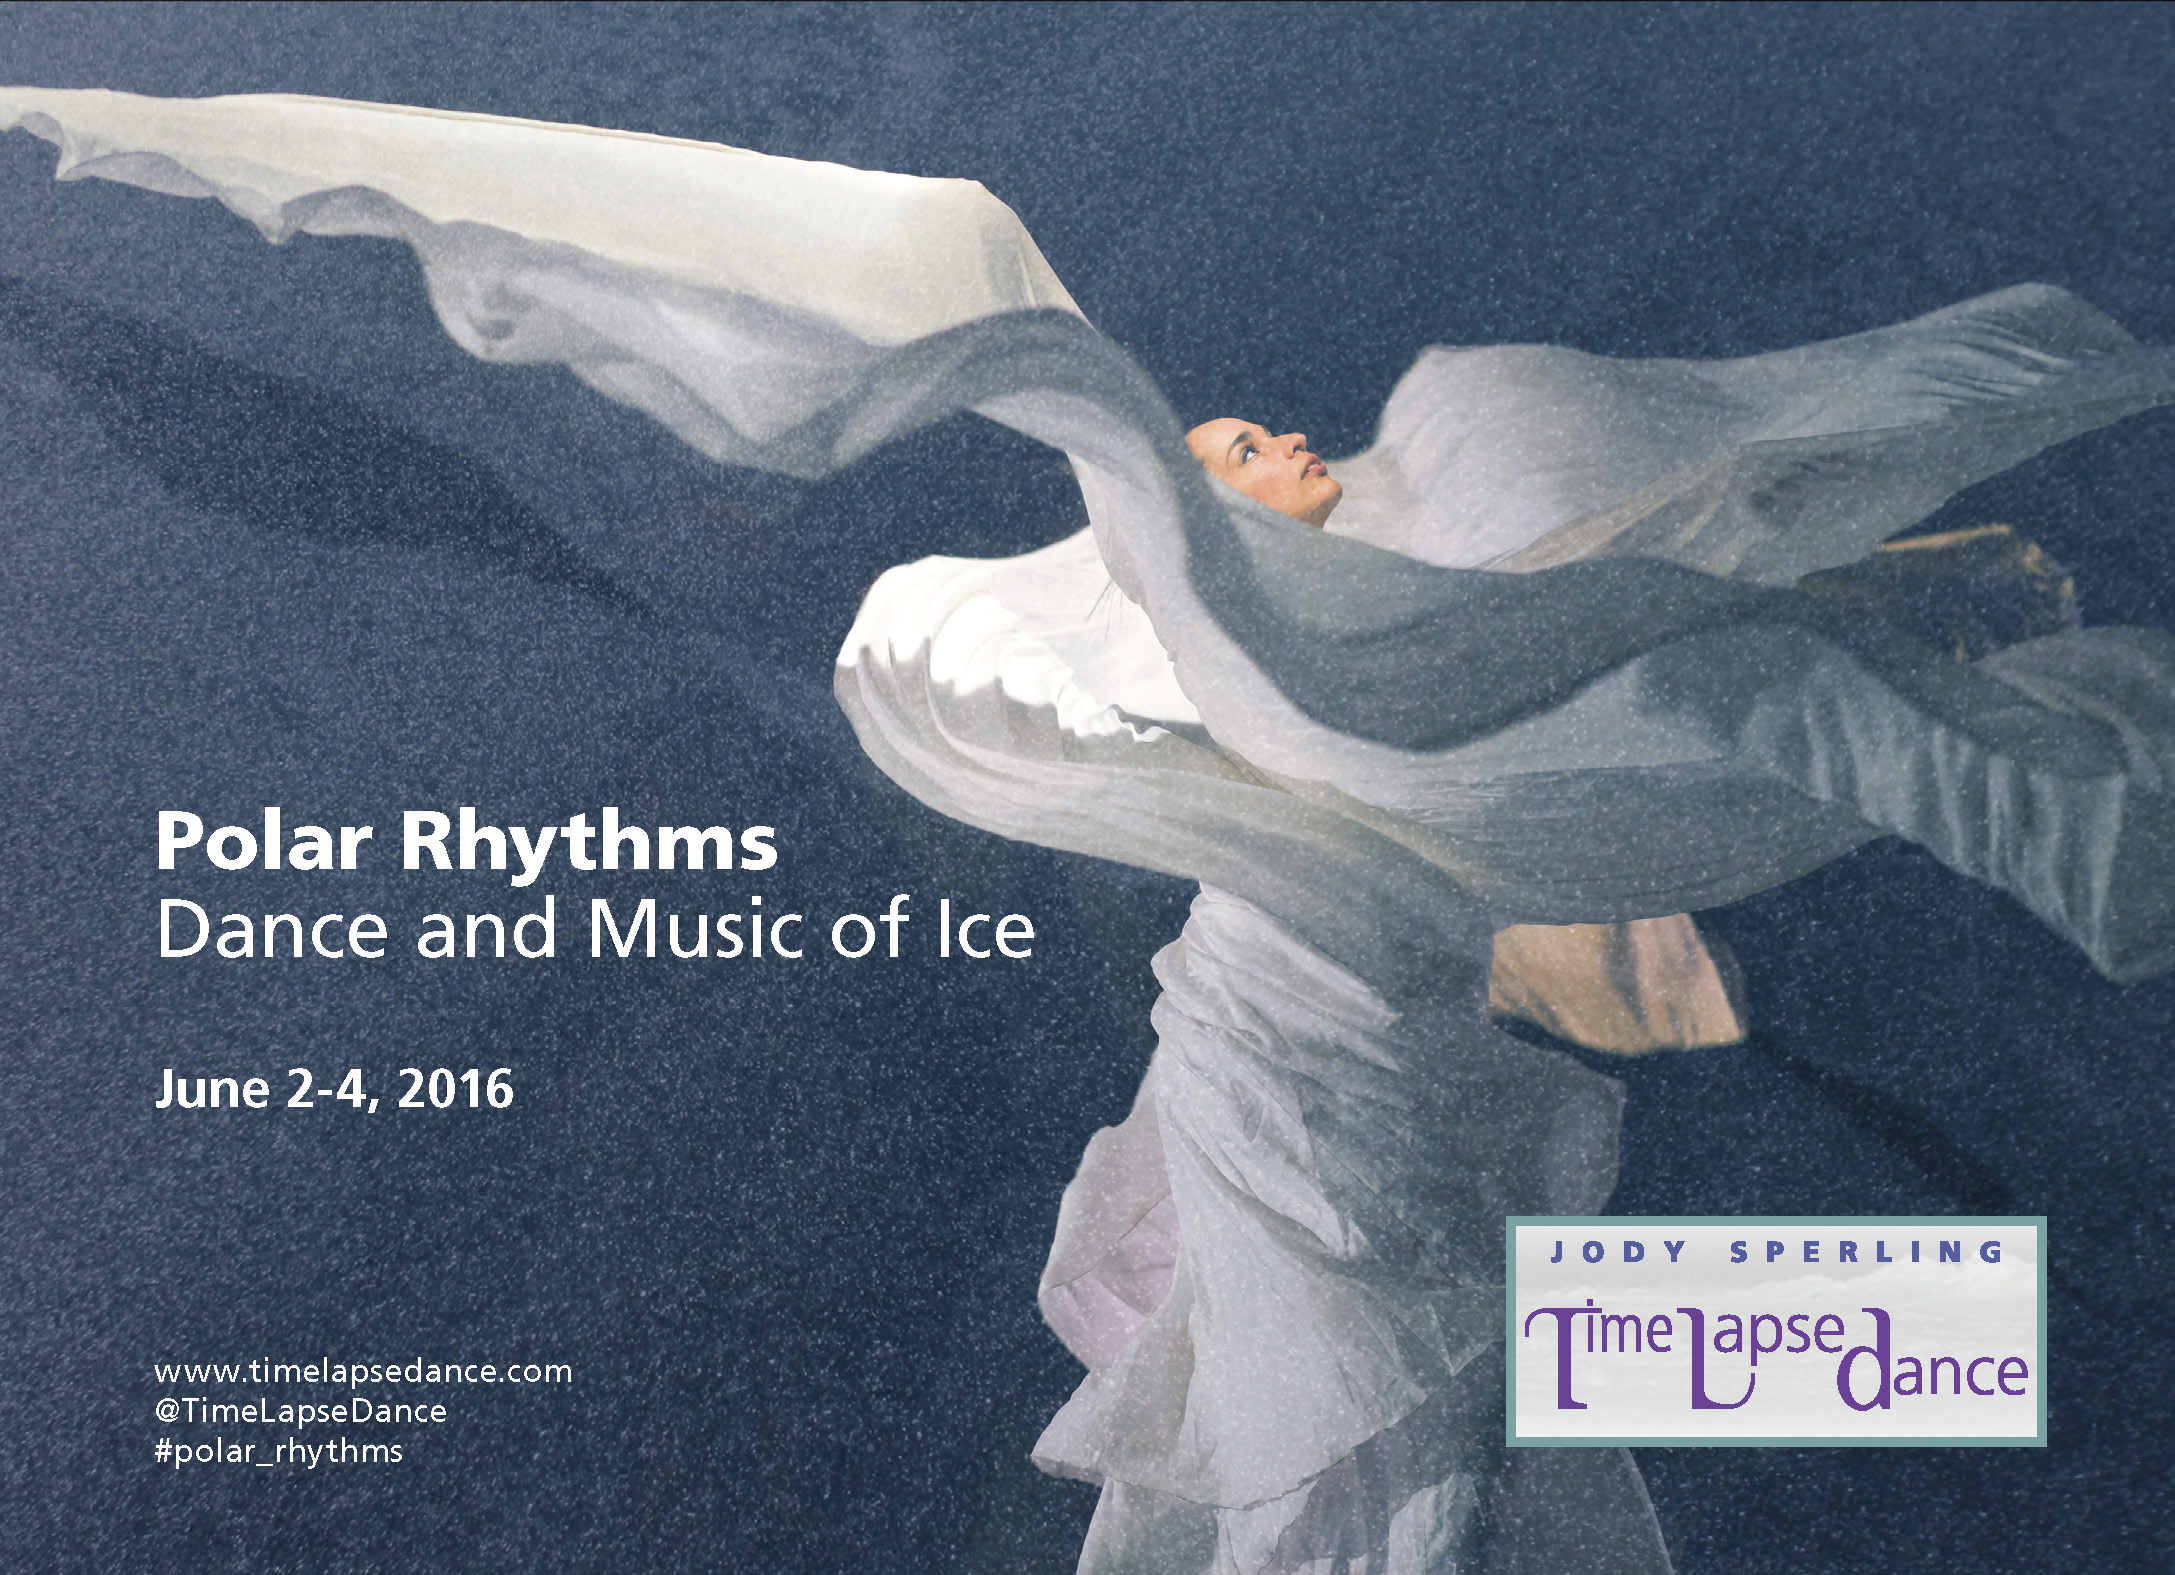 Polar Rhythms Dance Performance Promotion (front)